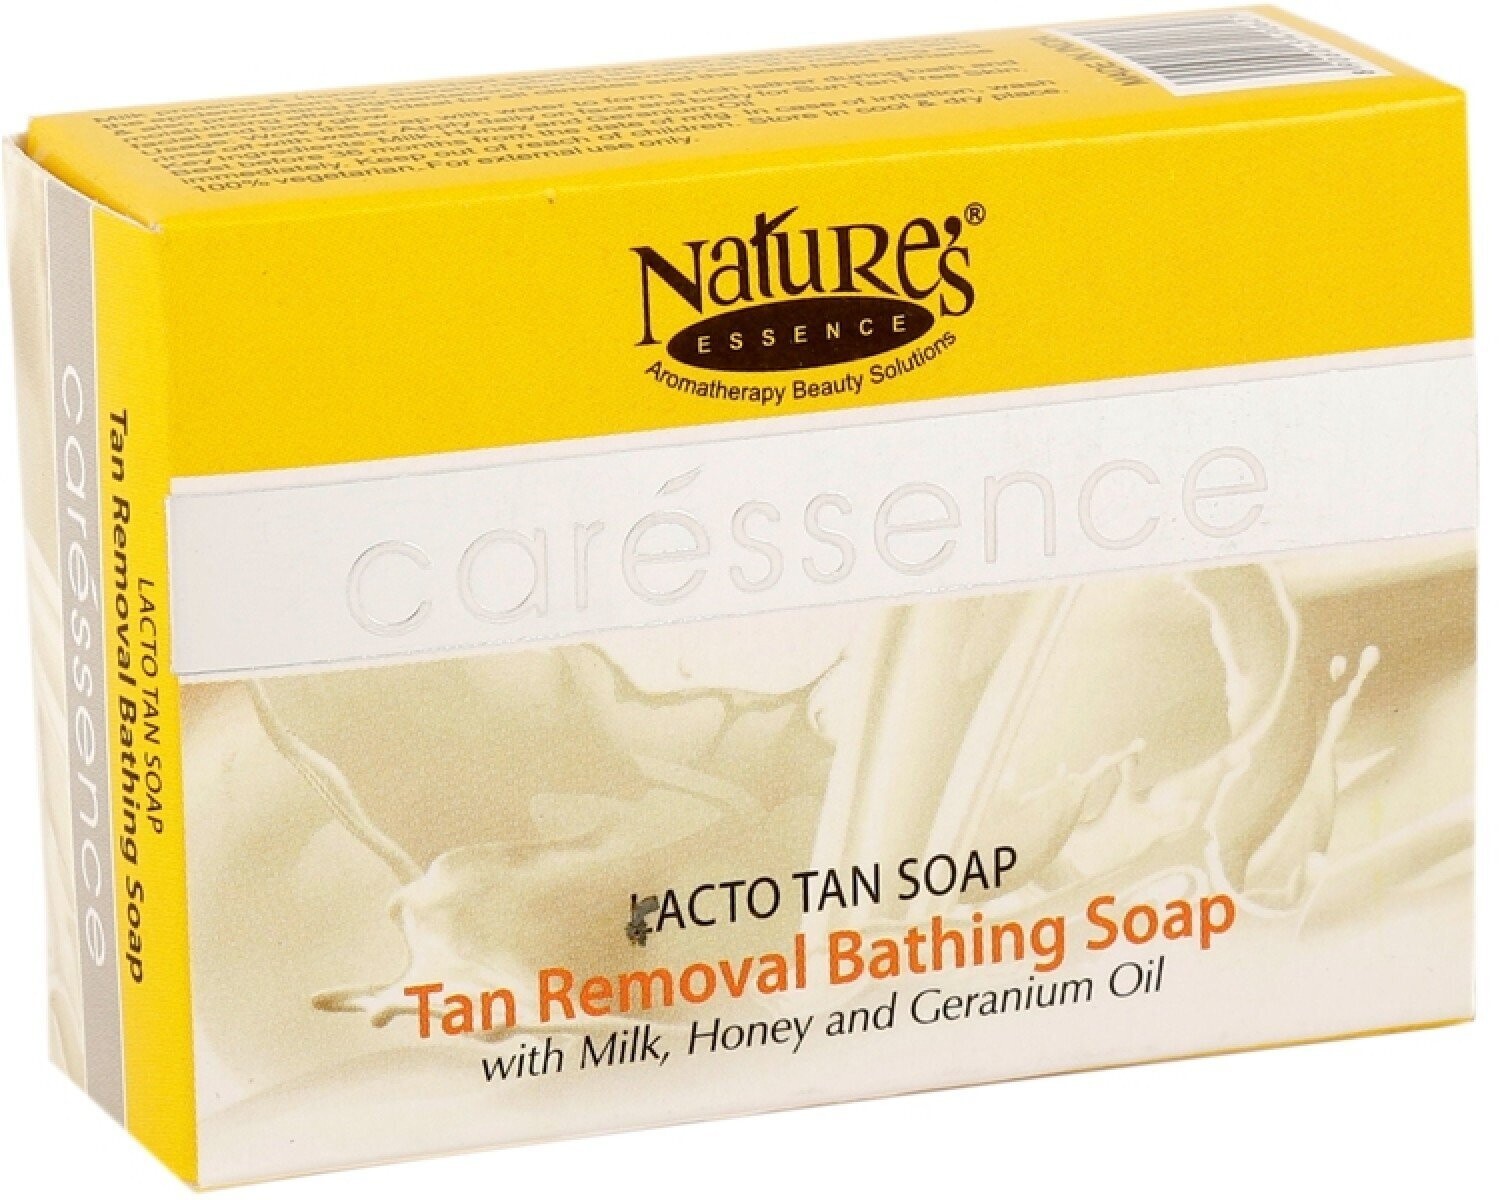 Nature's Essence Caressence Lacto Tan Soap, 75g